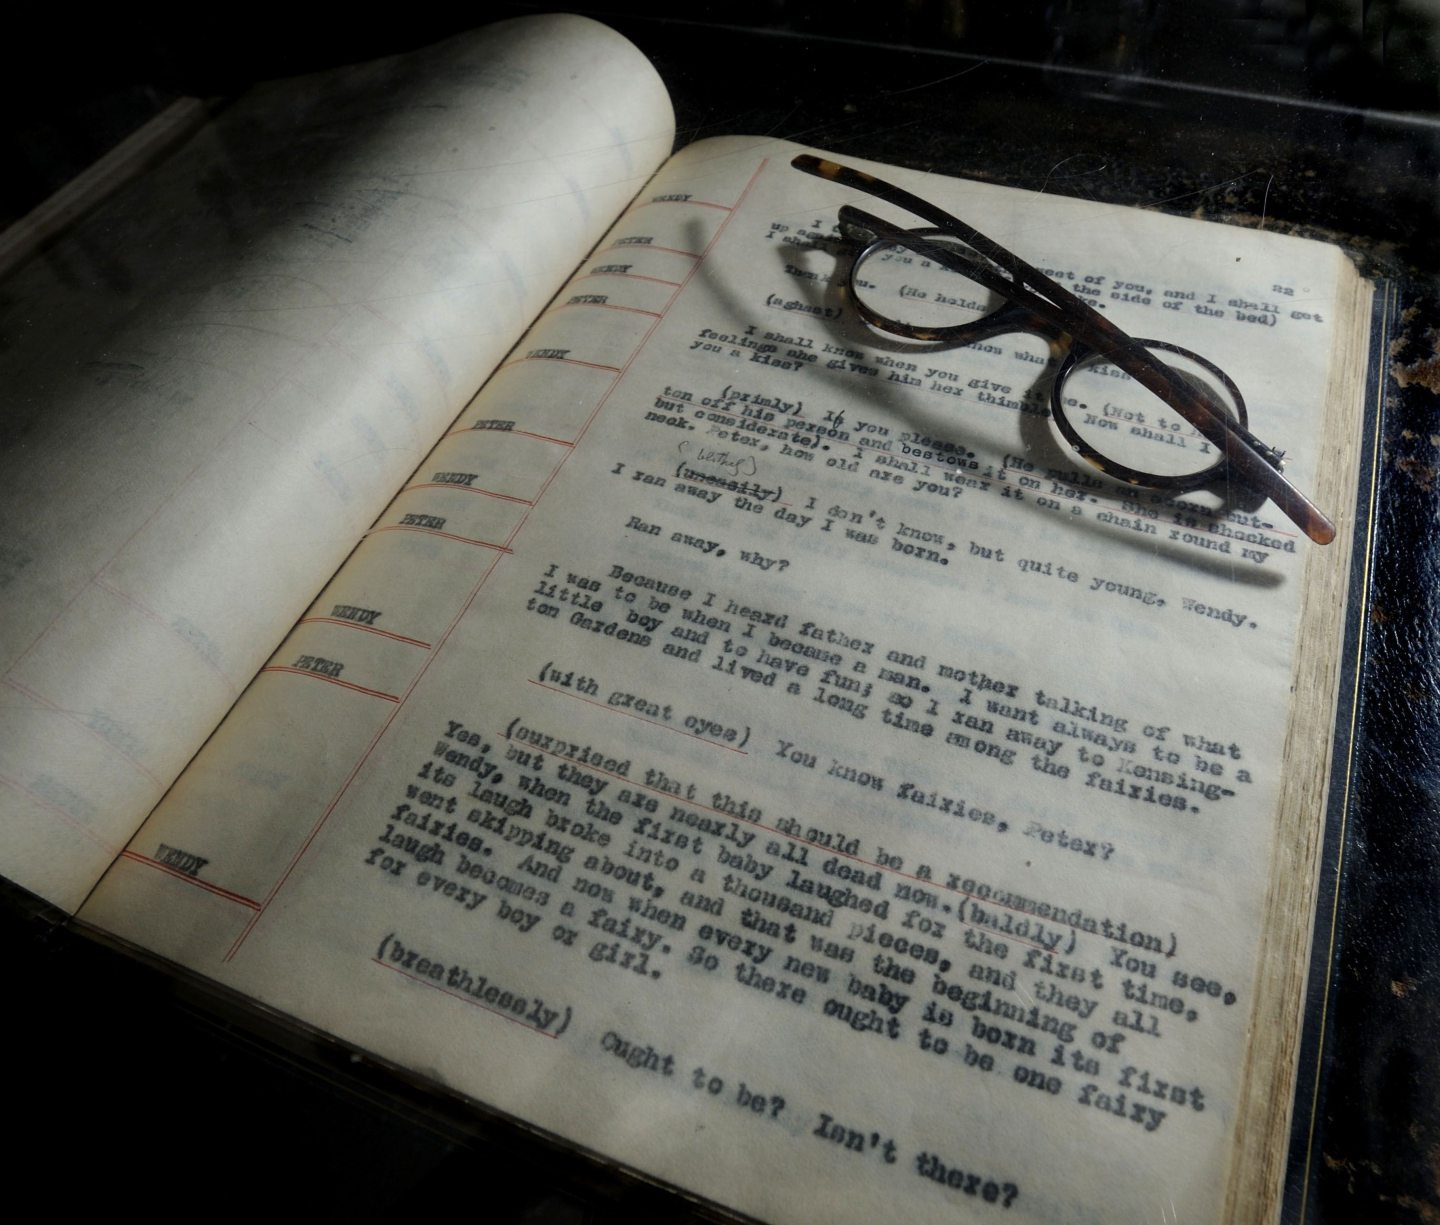 The original manuscript for Peter Pan on display at JM Barrie's home in Kirriemuir. Image: Shutterstock.